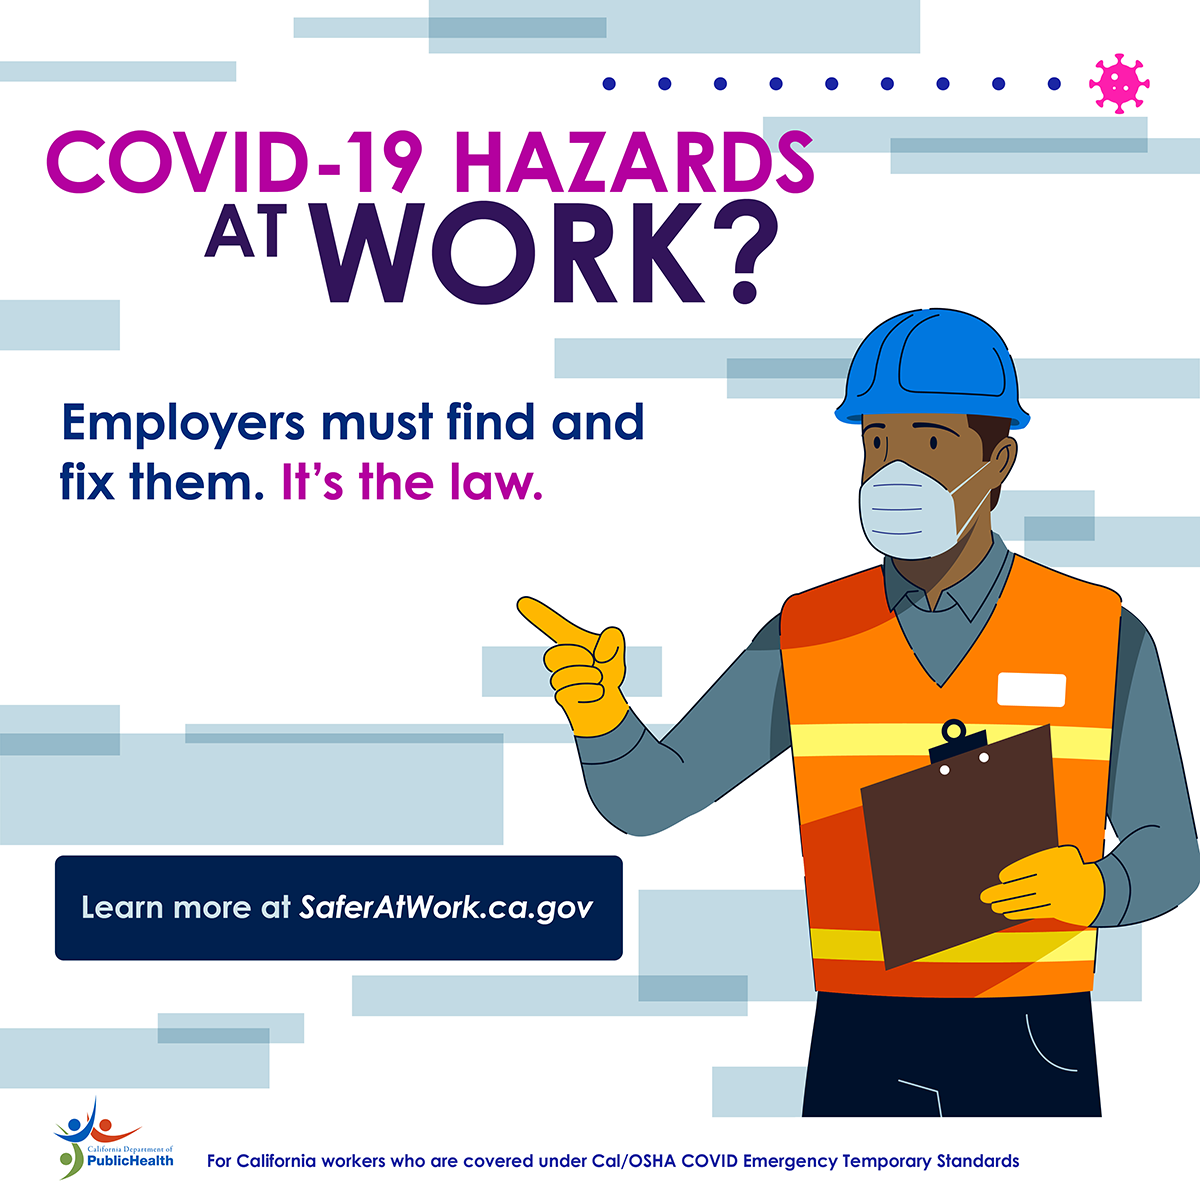 COVID-19 hazards at work?